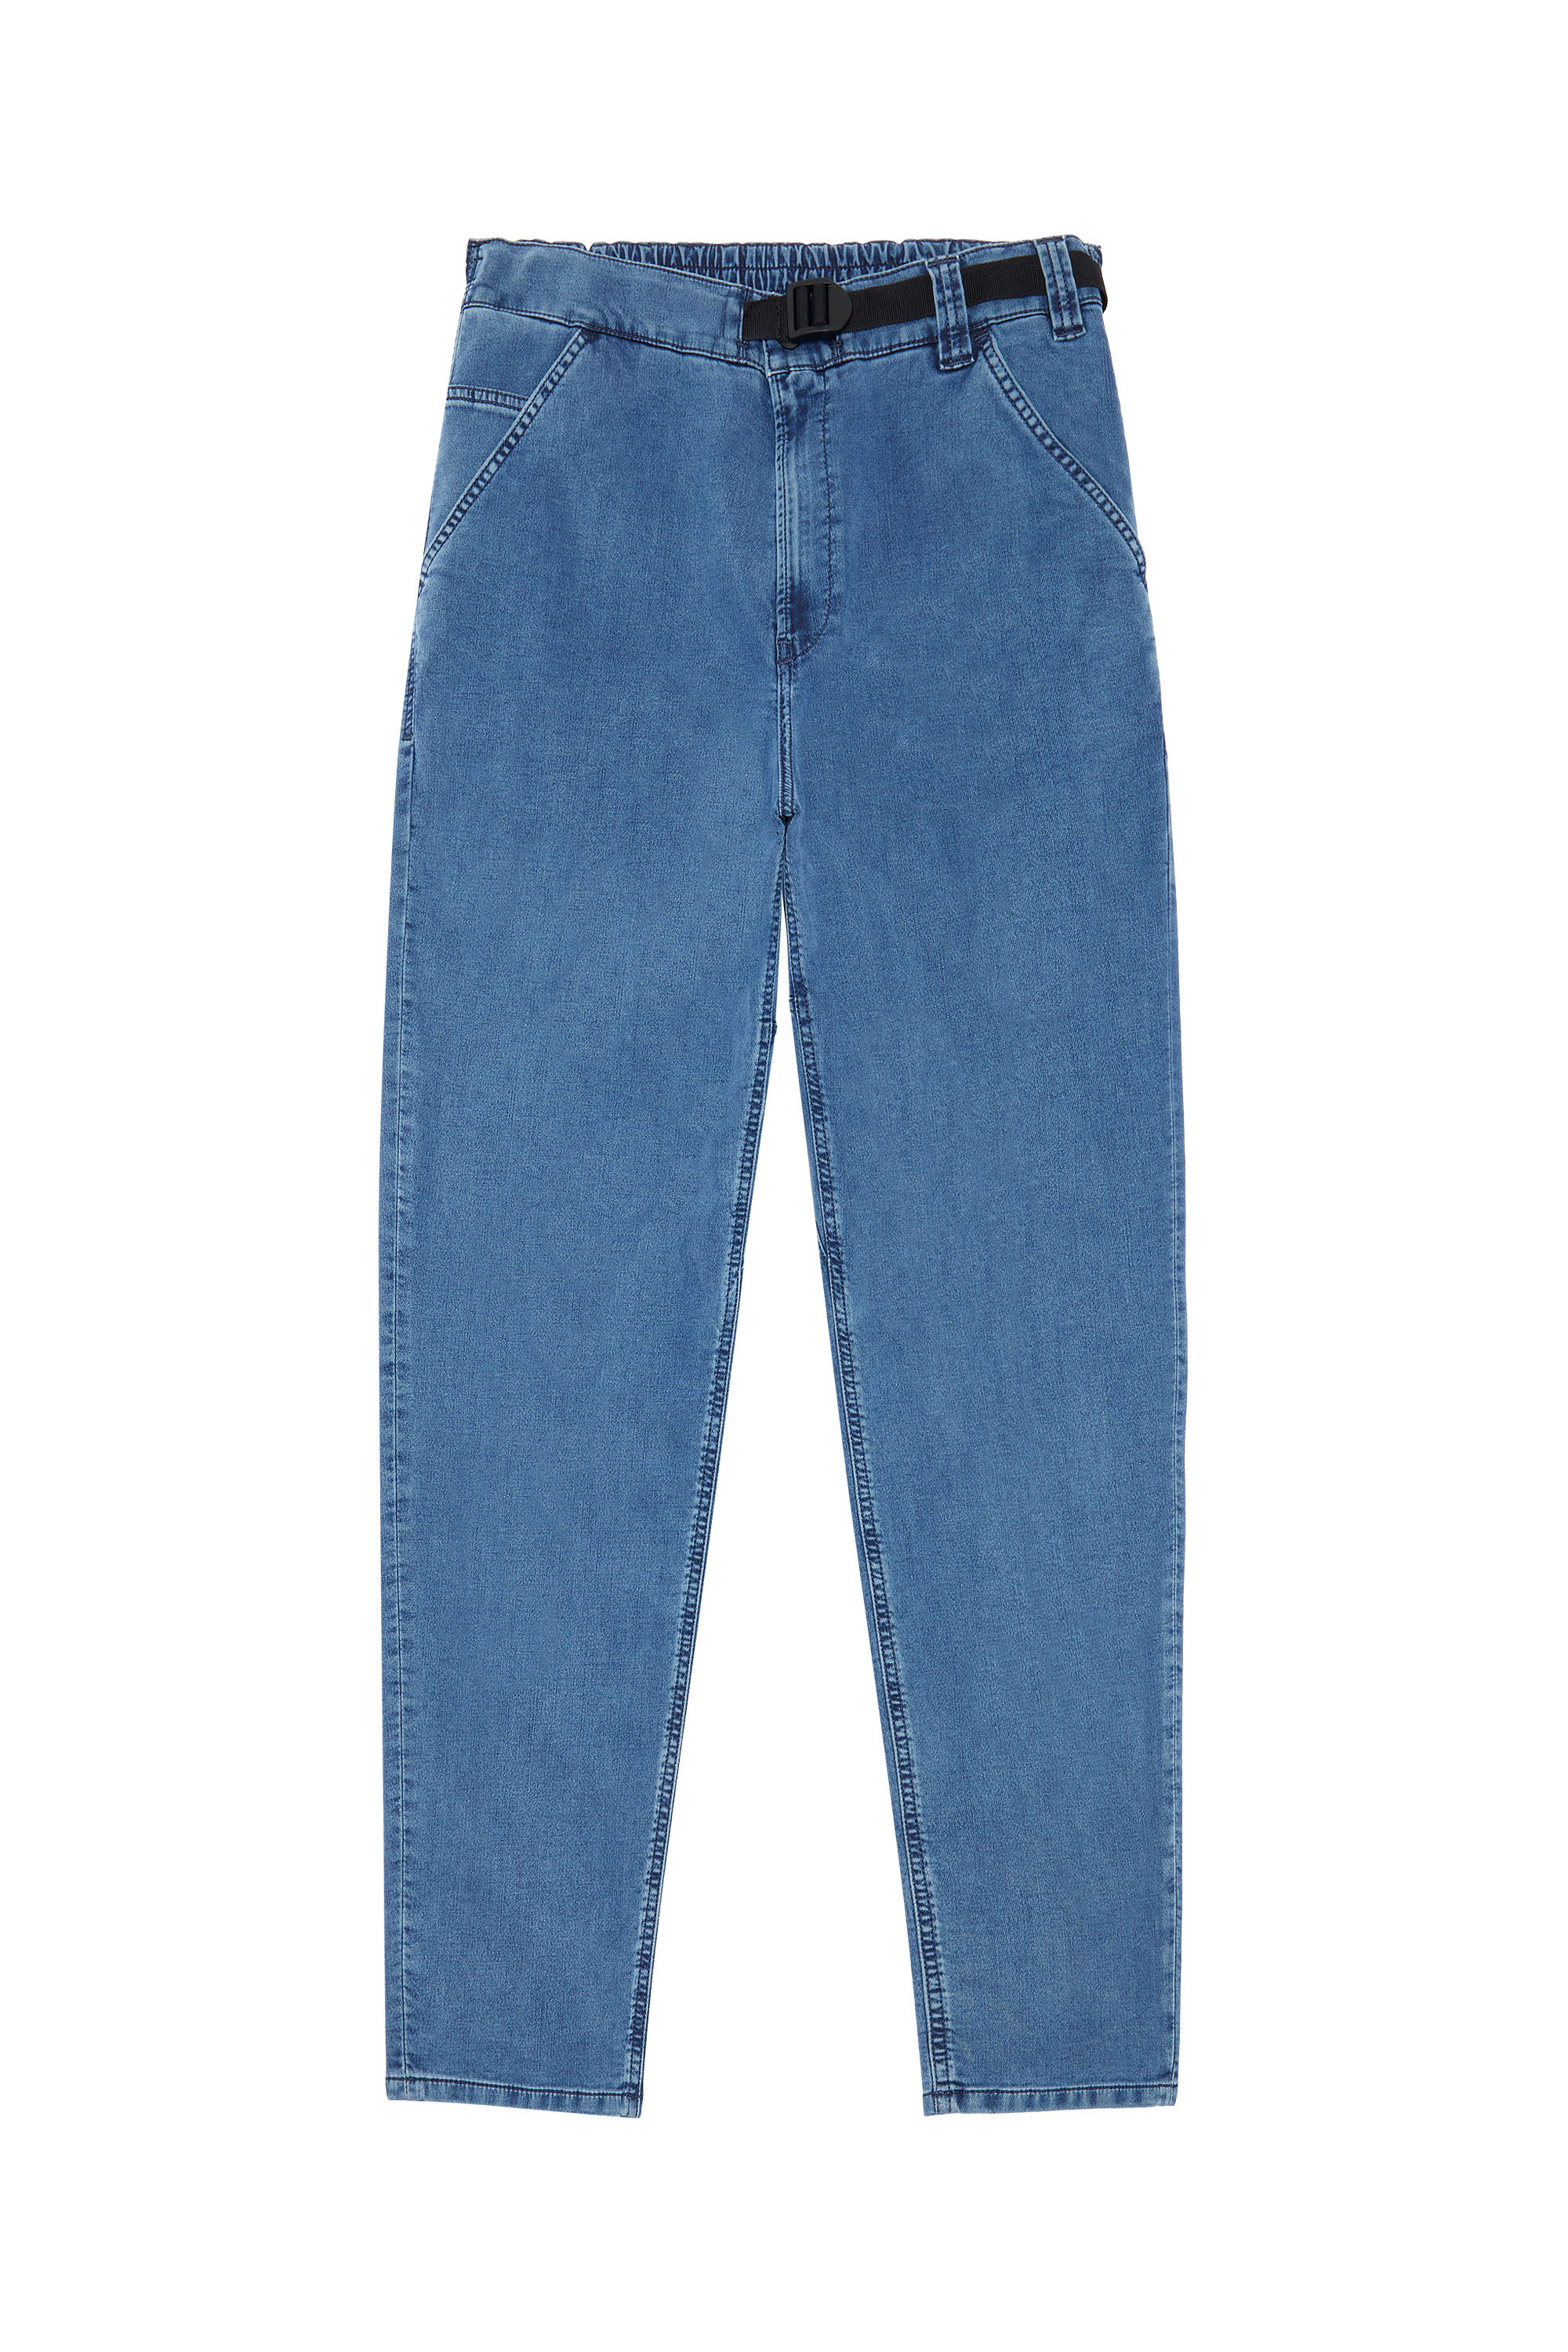 Krooley JoggJeans® 069ZK Tapered, Medium blue - Jeans